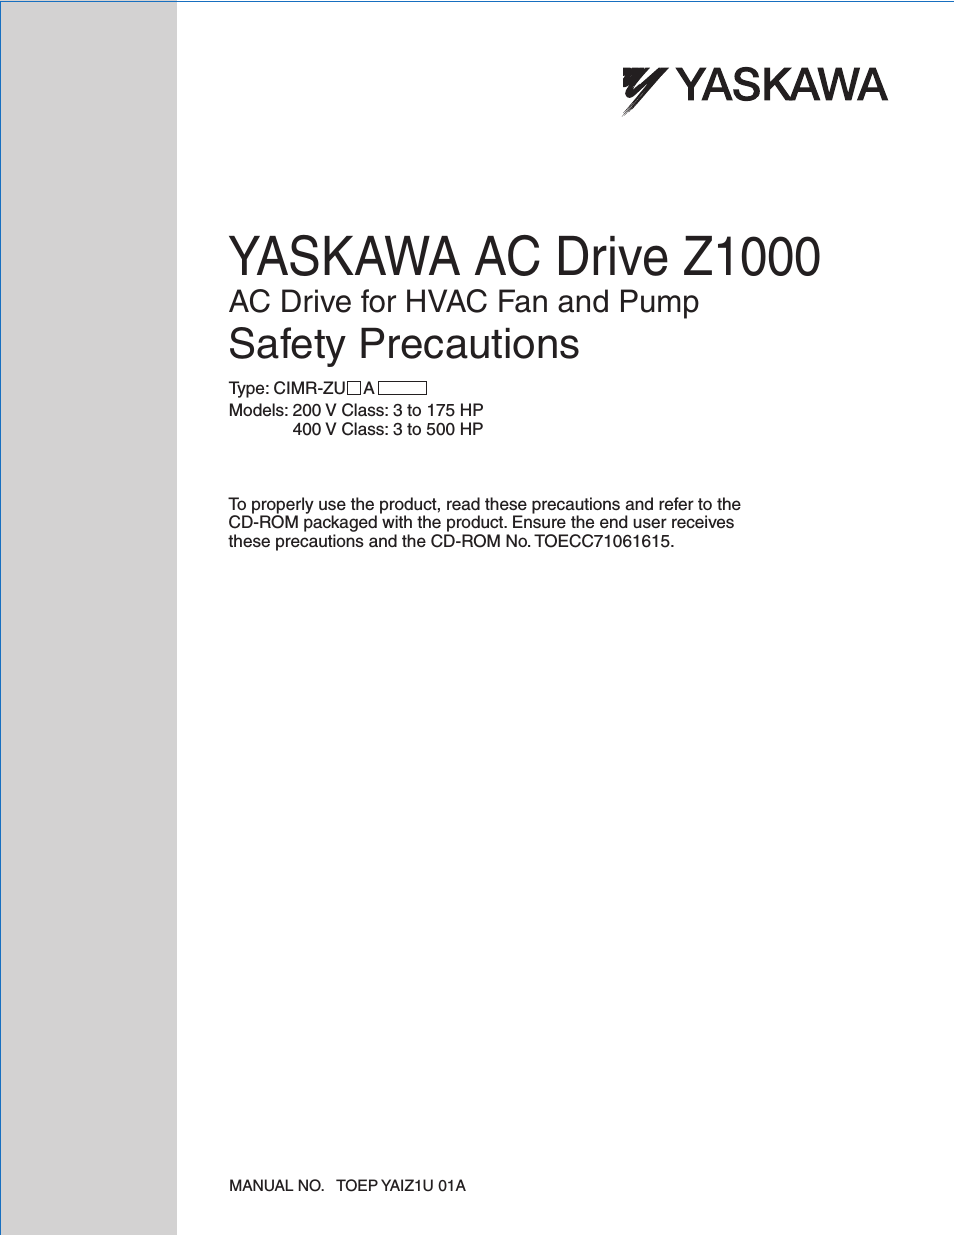 AC Drive Z1000 HVAC